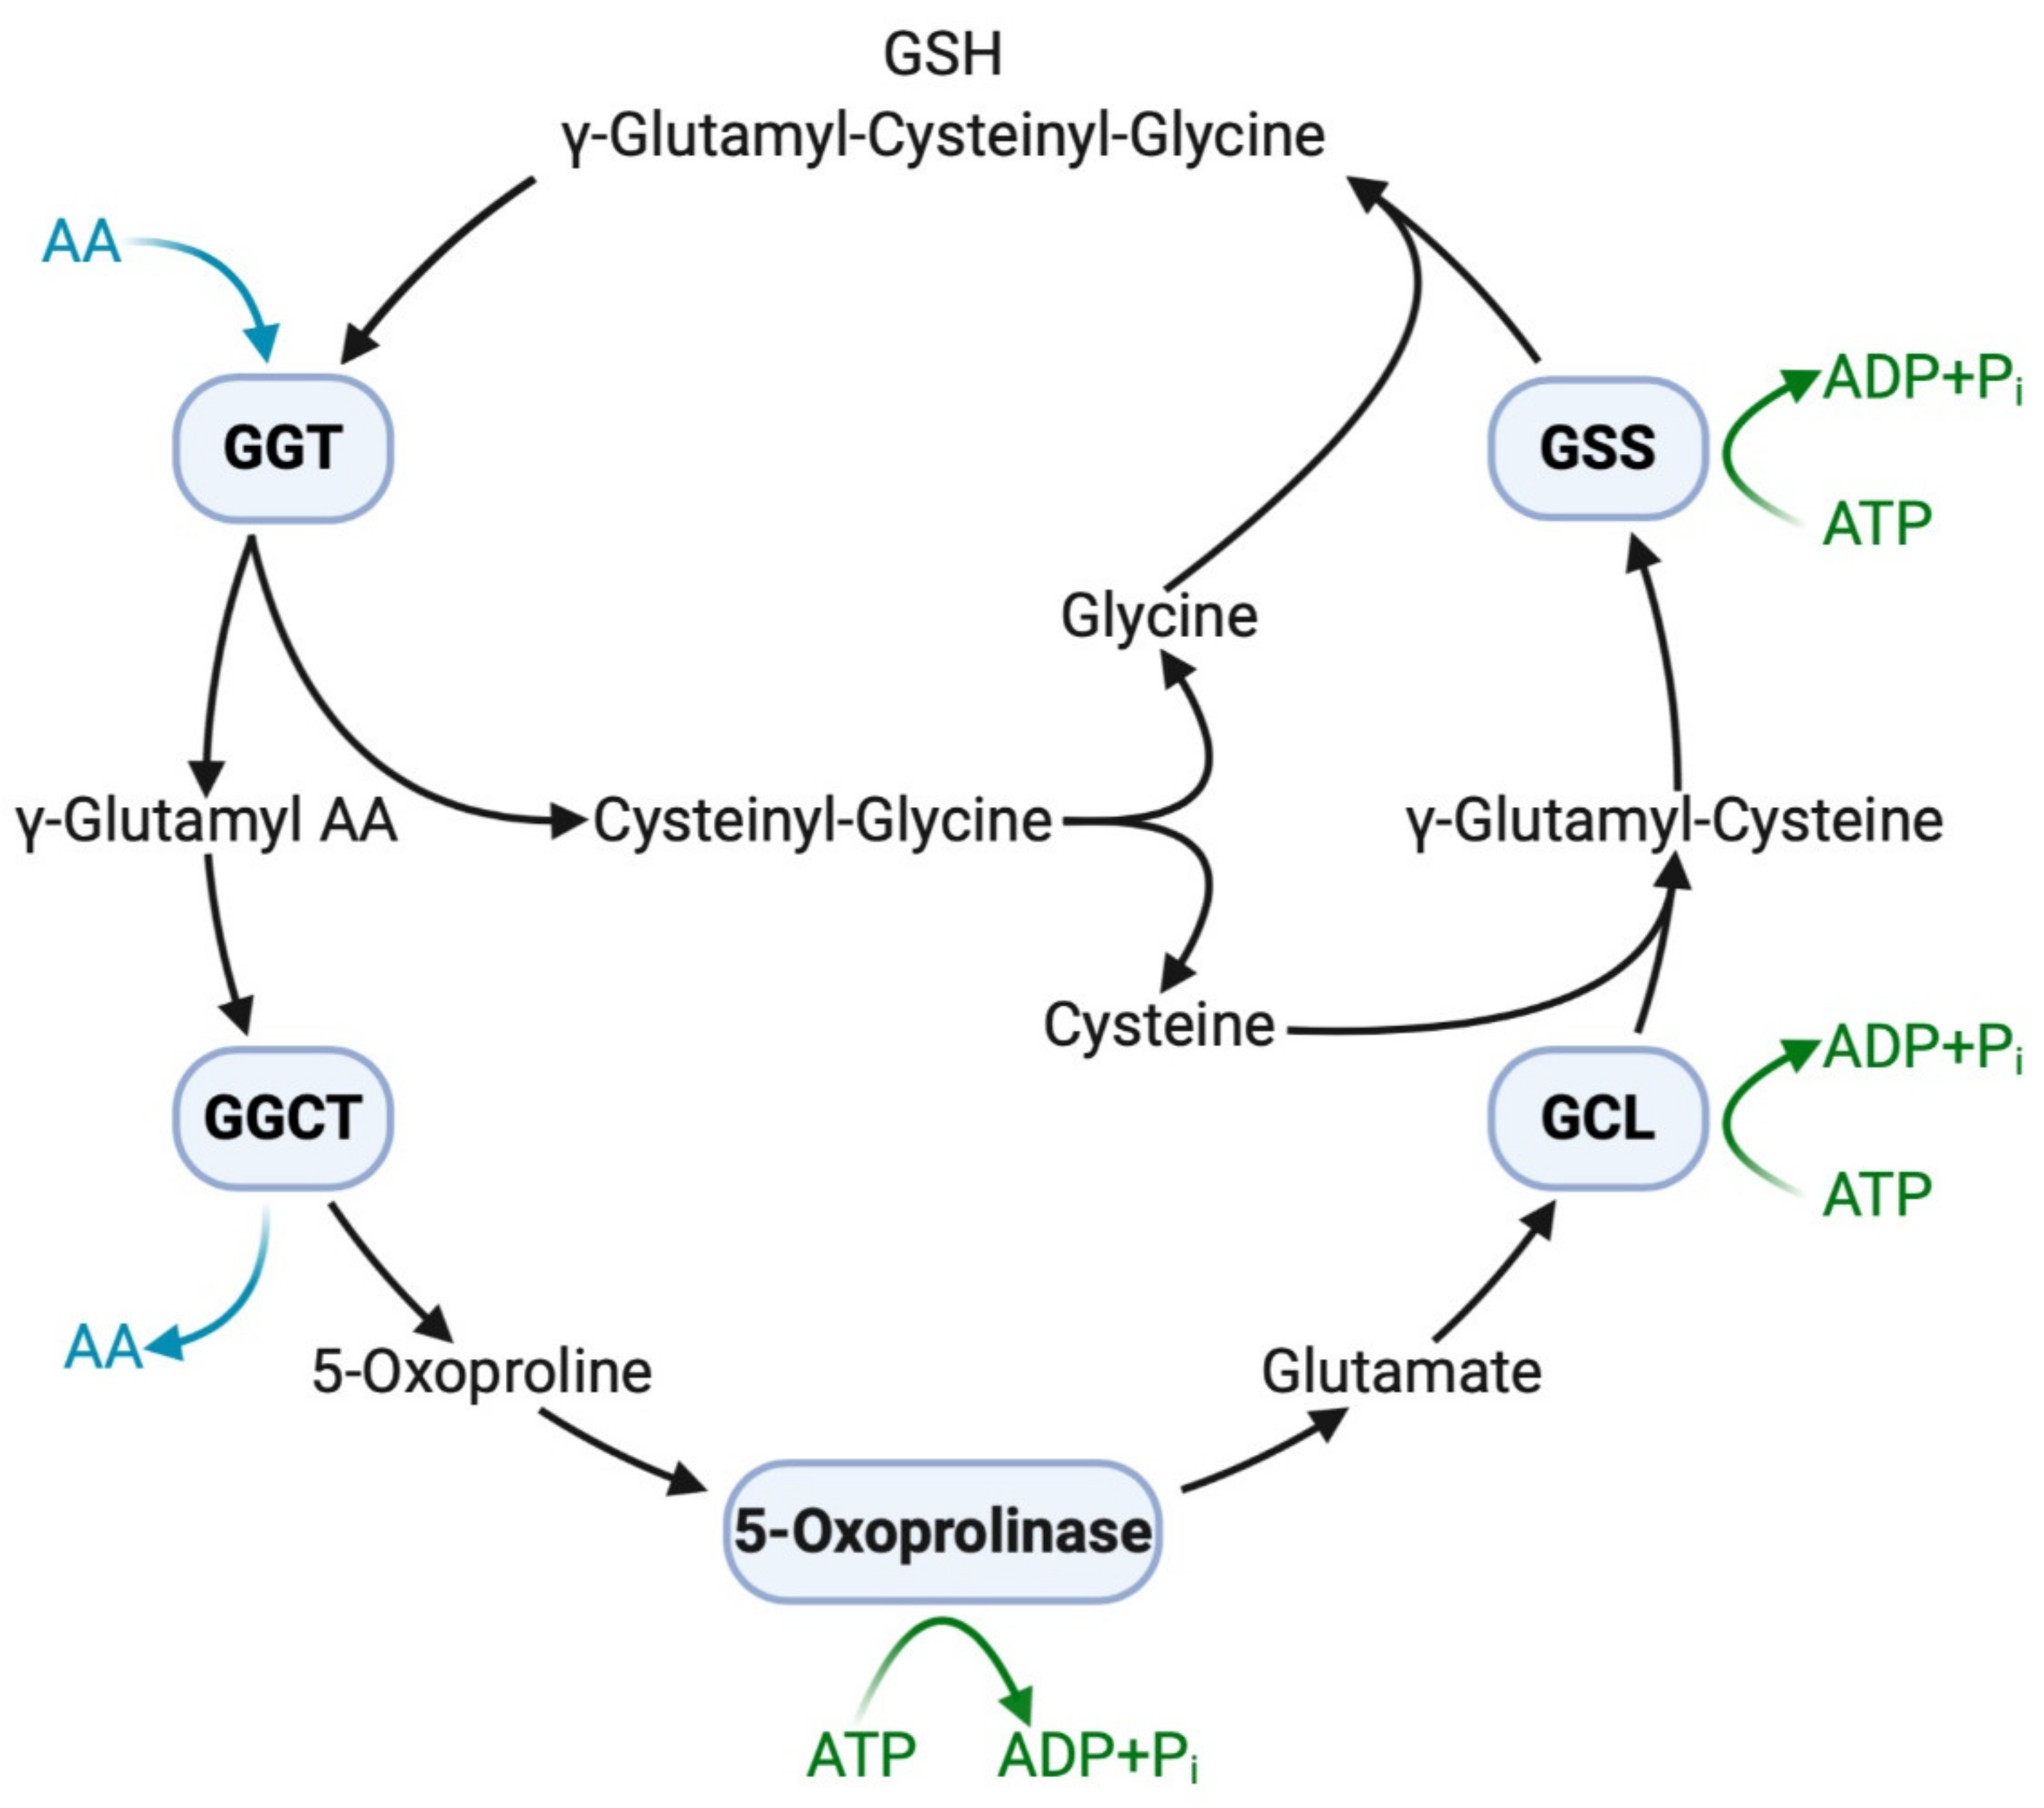 Gamma glutamyl transferase